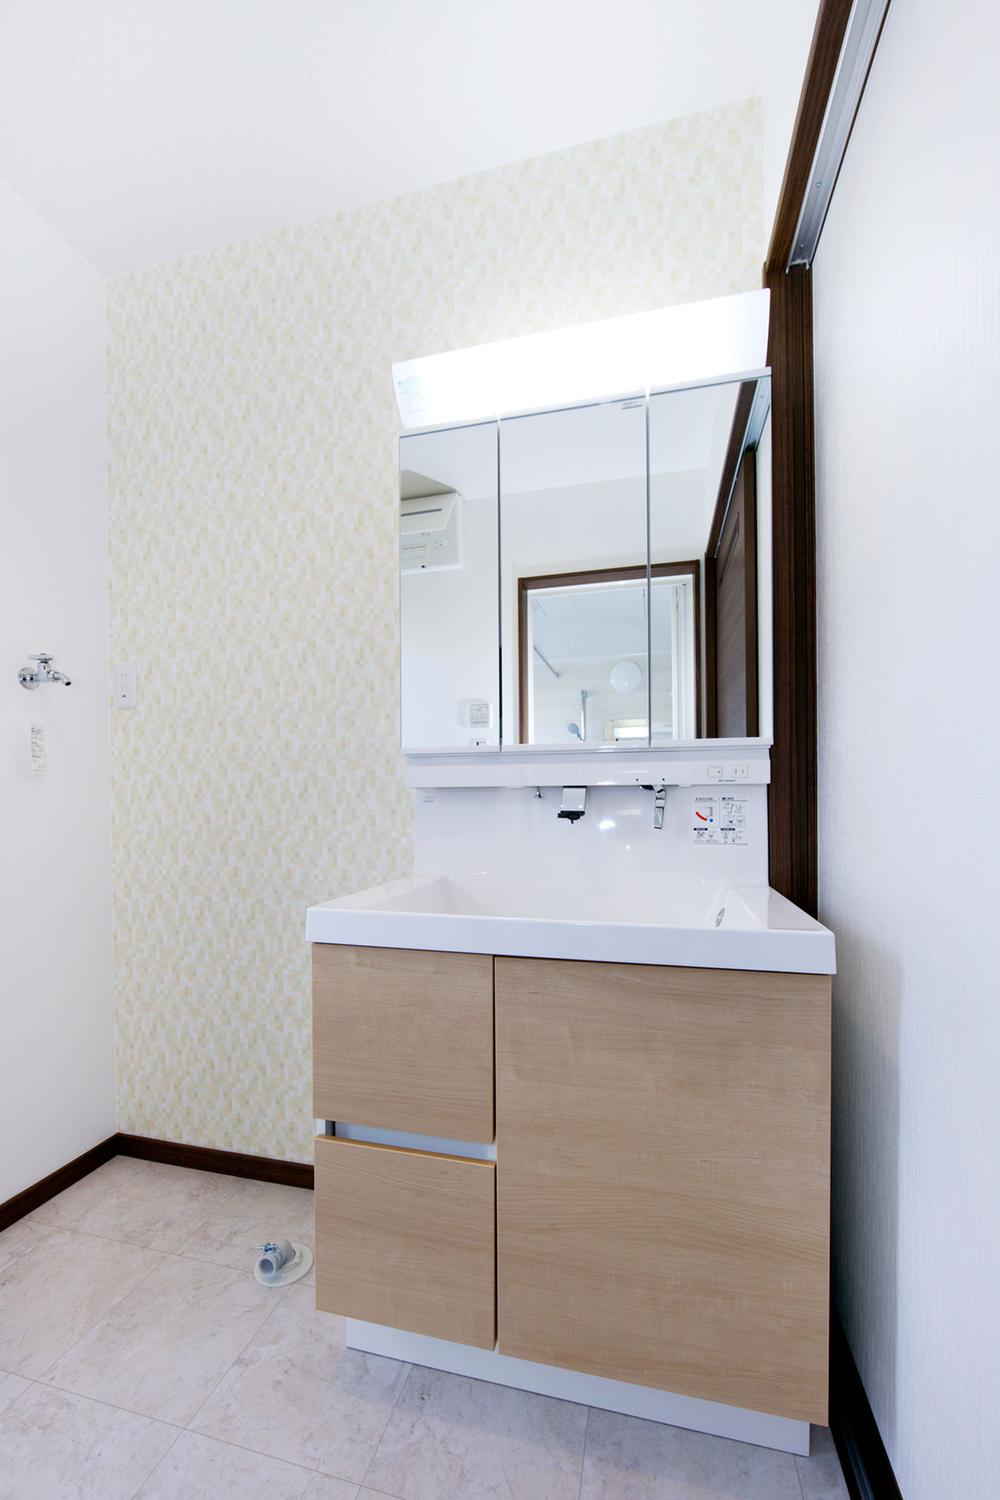 Wash basin, toilet. Simple and stylish bathroom vanity